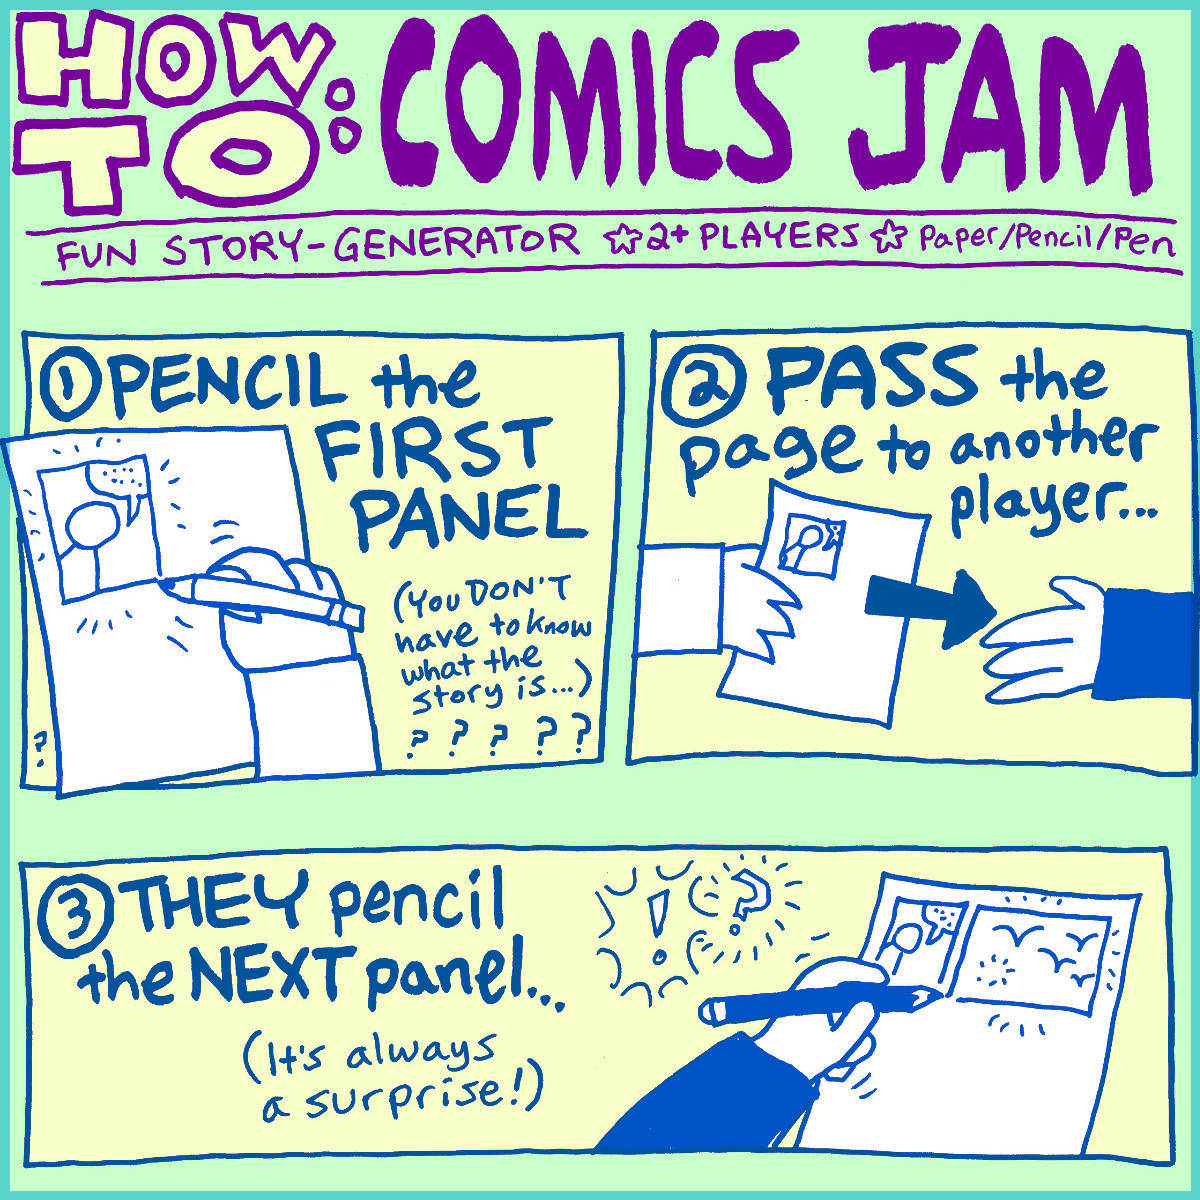 How to COMICS JAM!